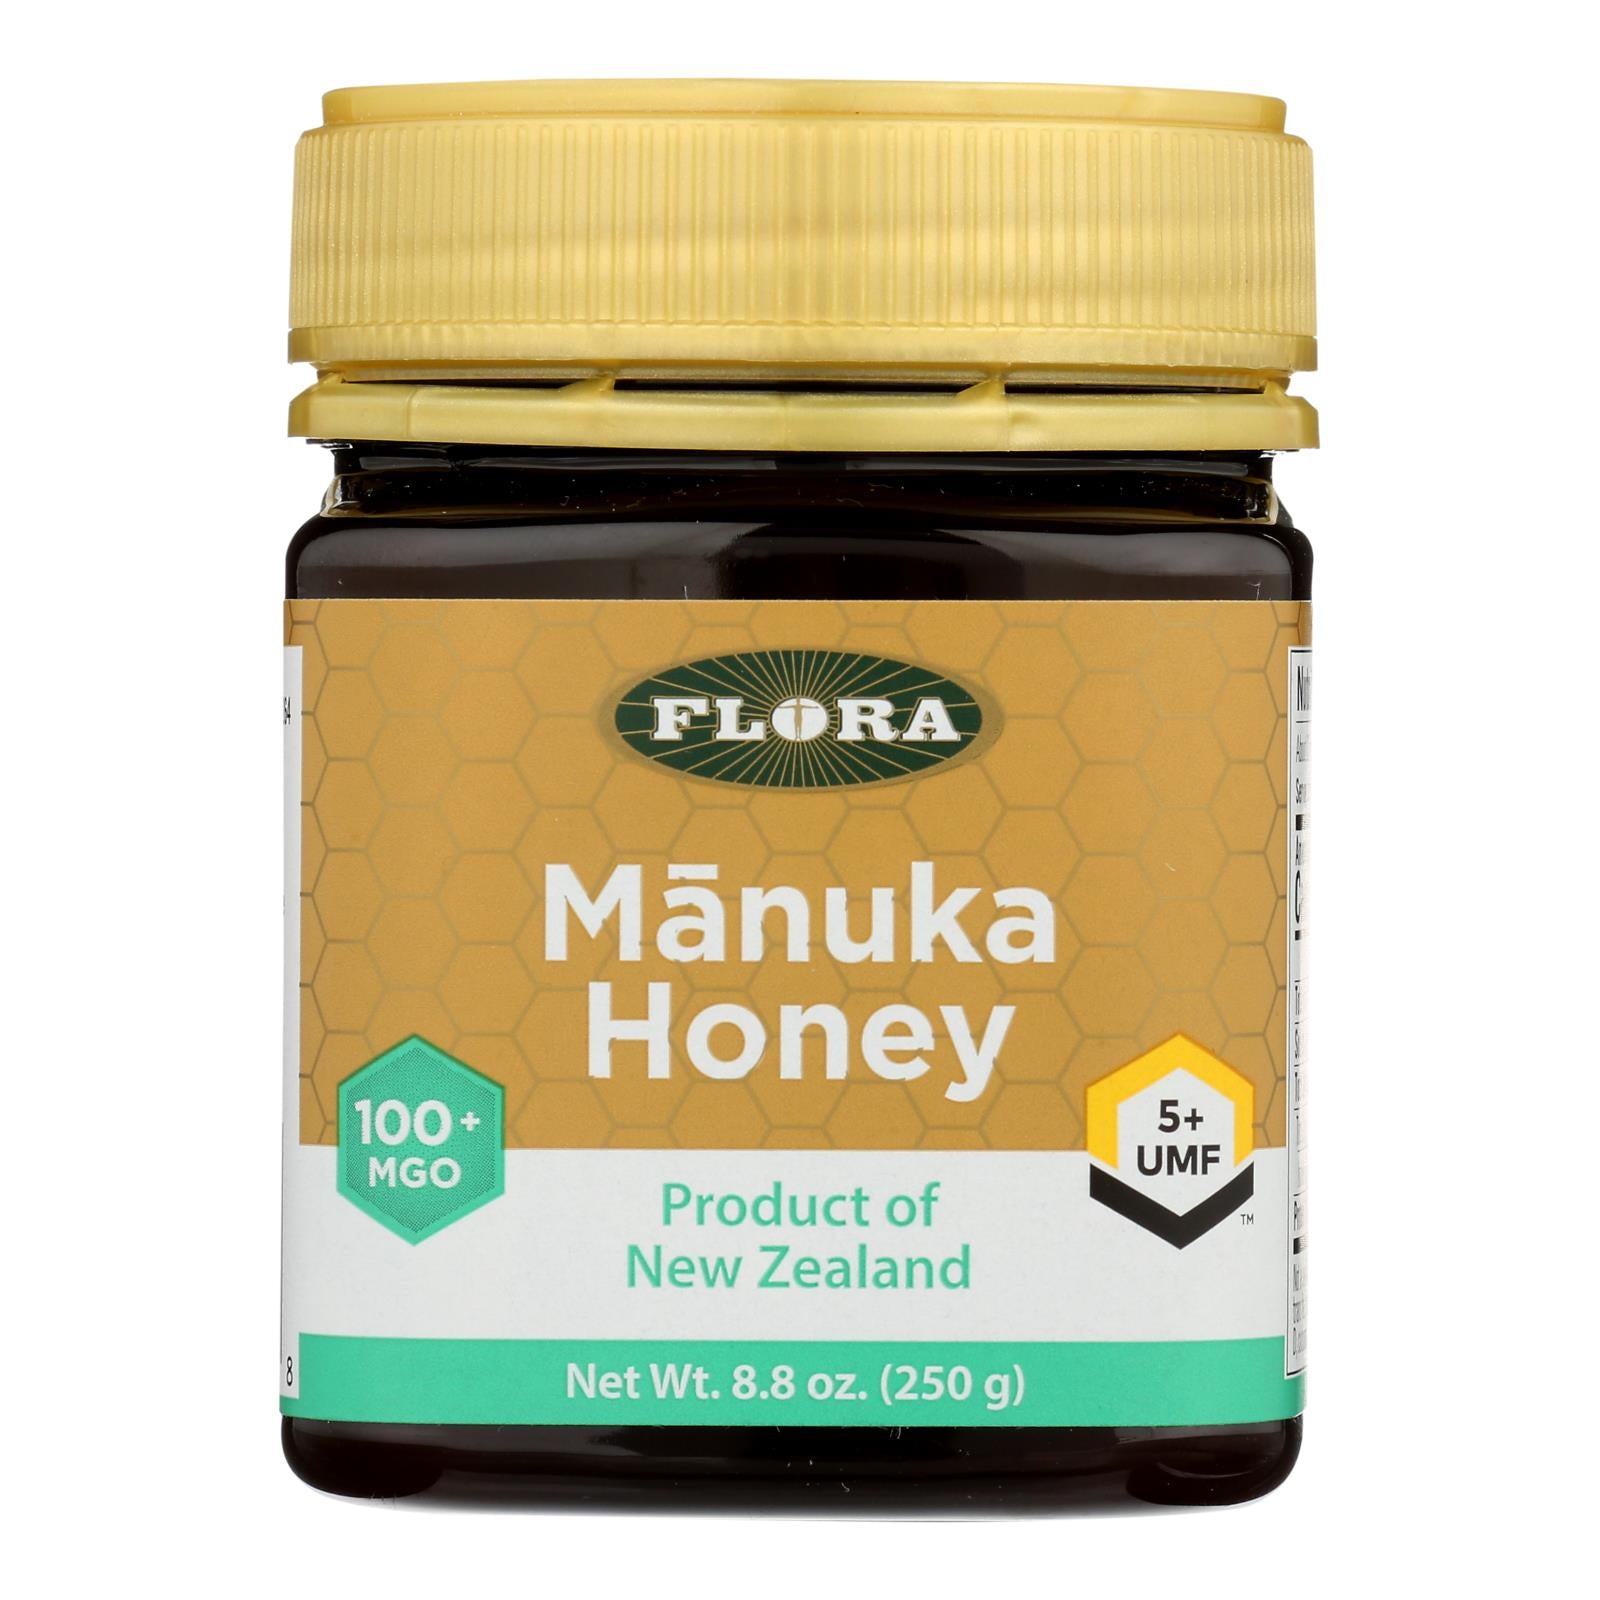 Flora - Manuka Honey Mgo 100+/5+ U - 1 Each-8.8 Fz